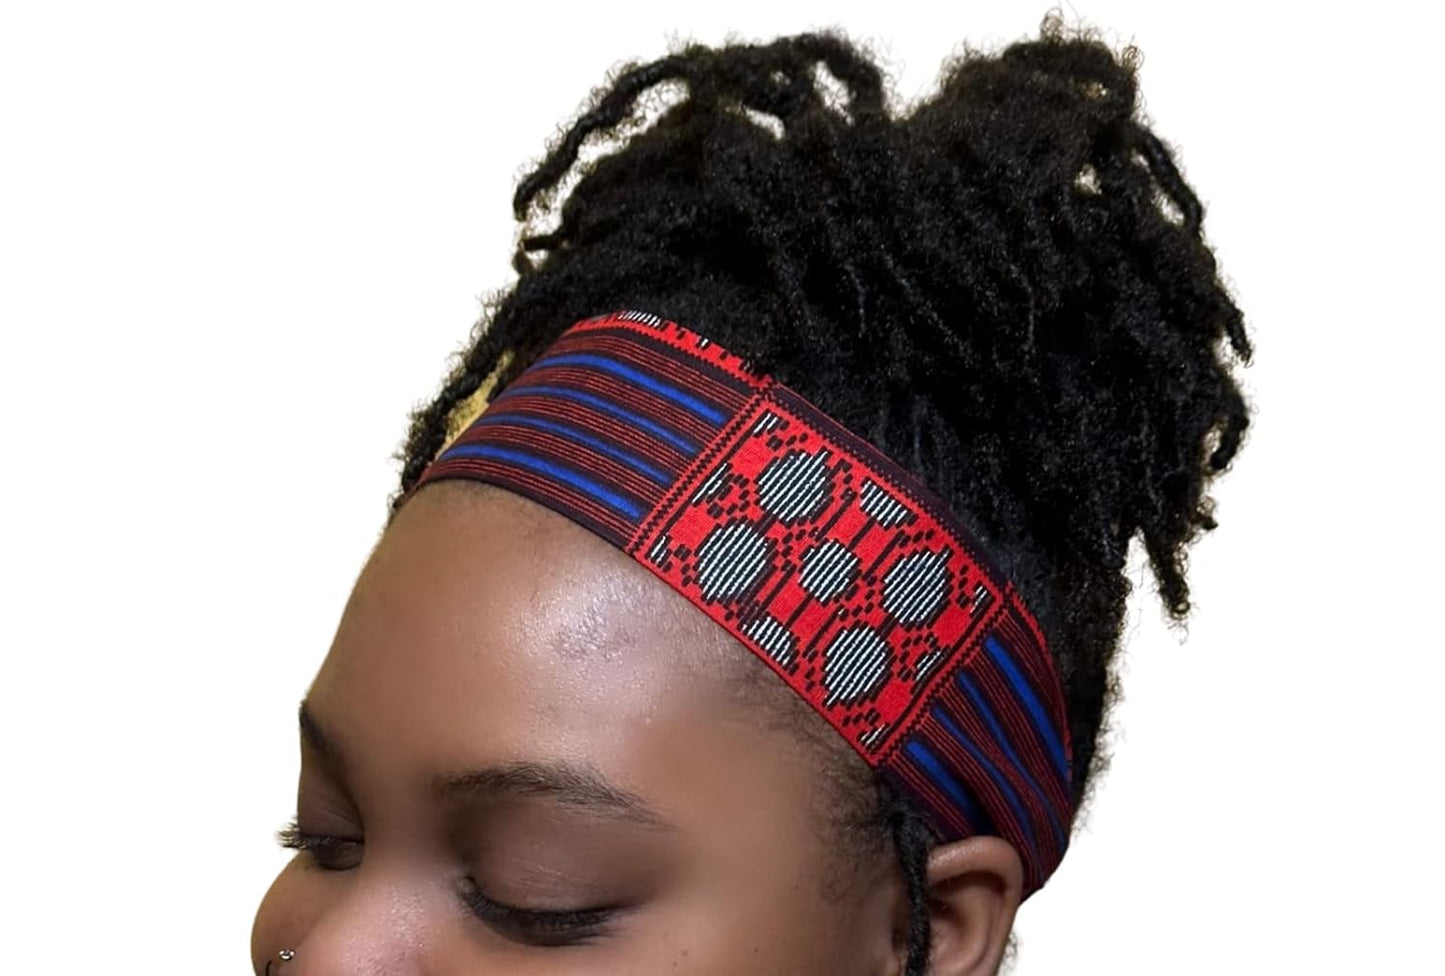 African Print Adjustable Headband